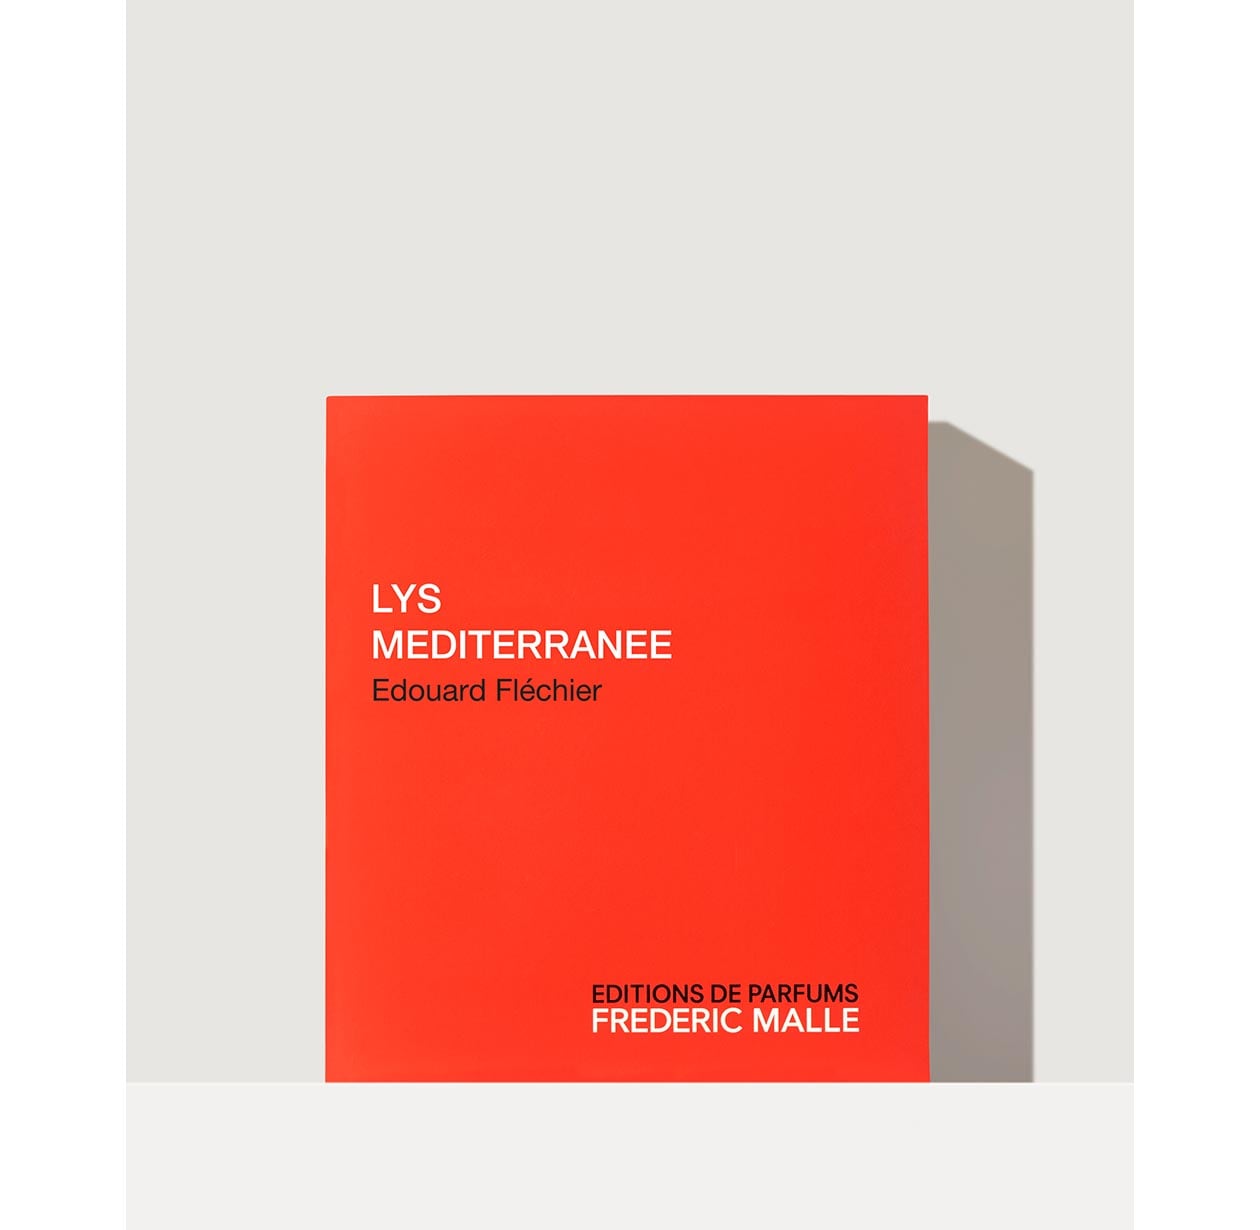 LYS MEDITERRANEE by Edouard Fléchier